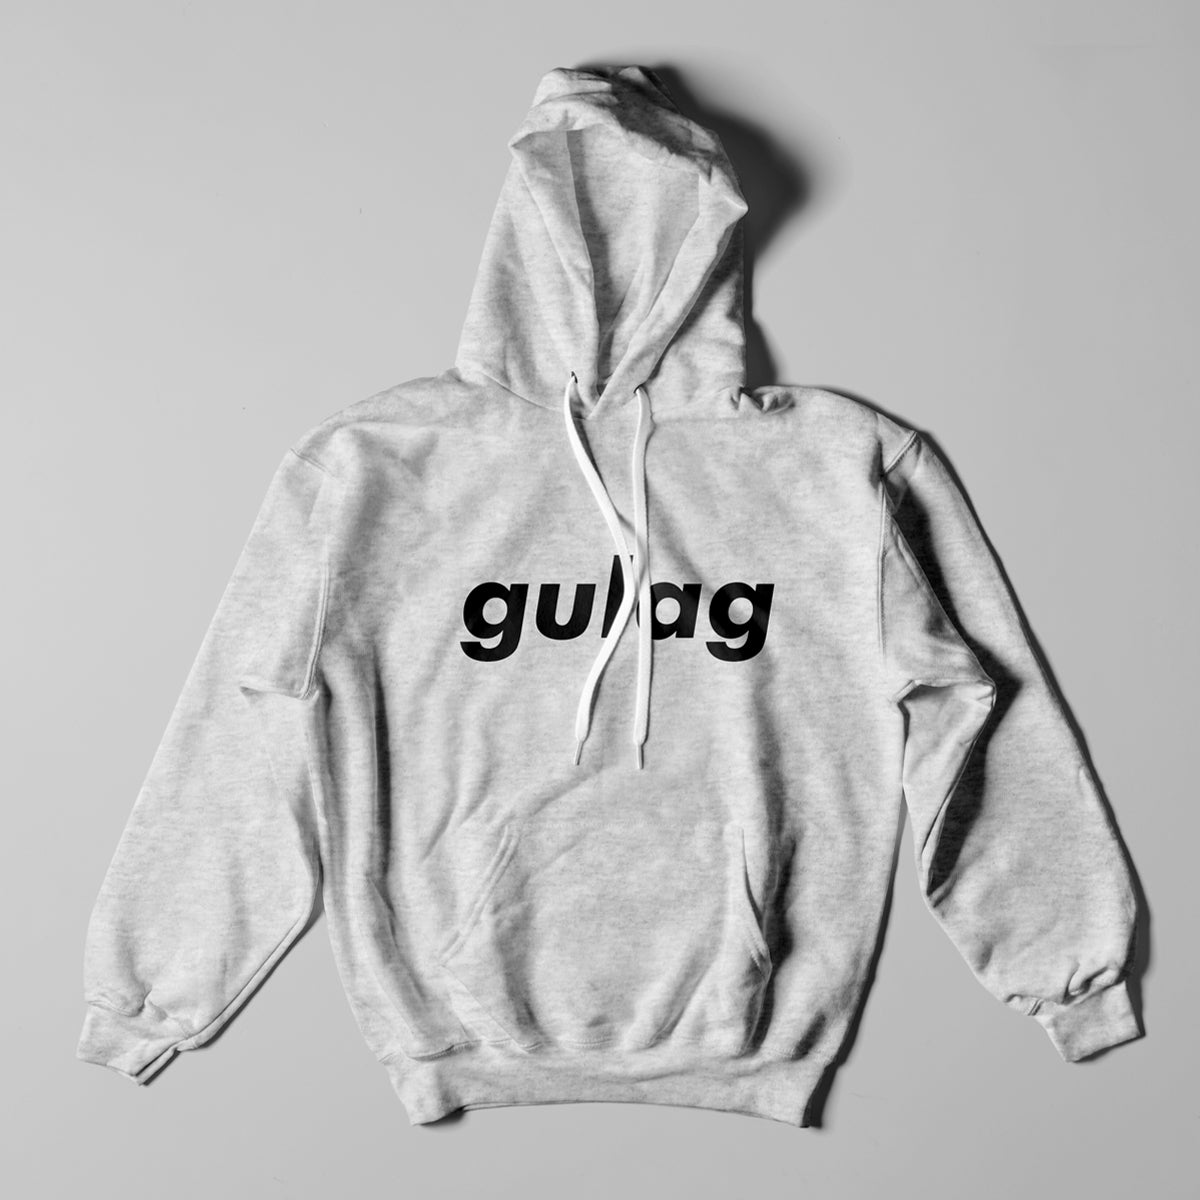 Gawddamm_it - Gulag heavyweight pullover hoodie